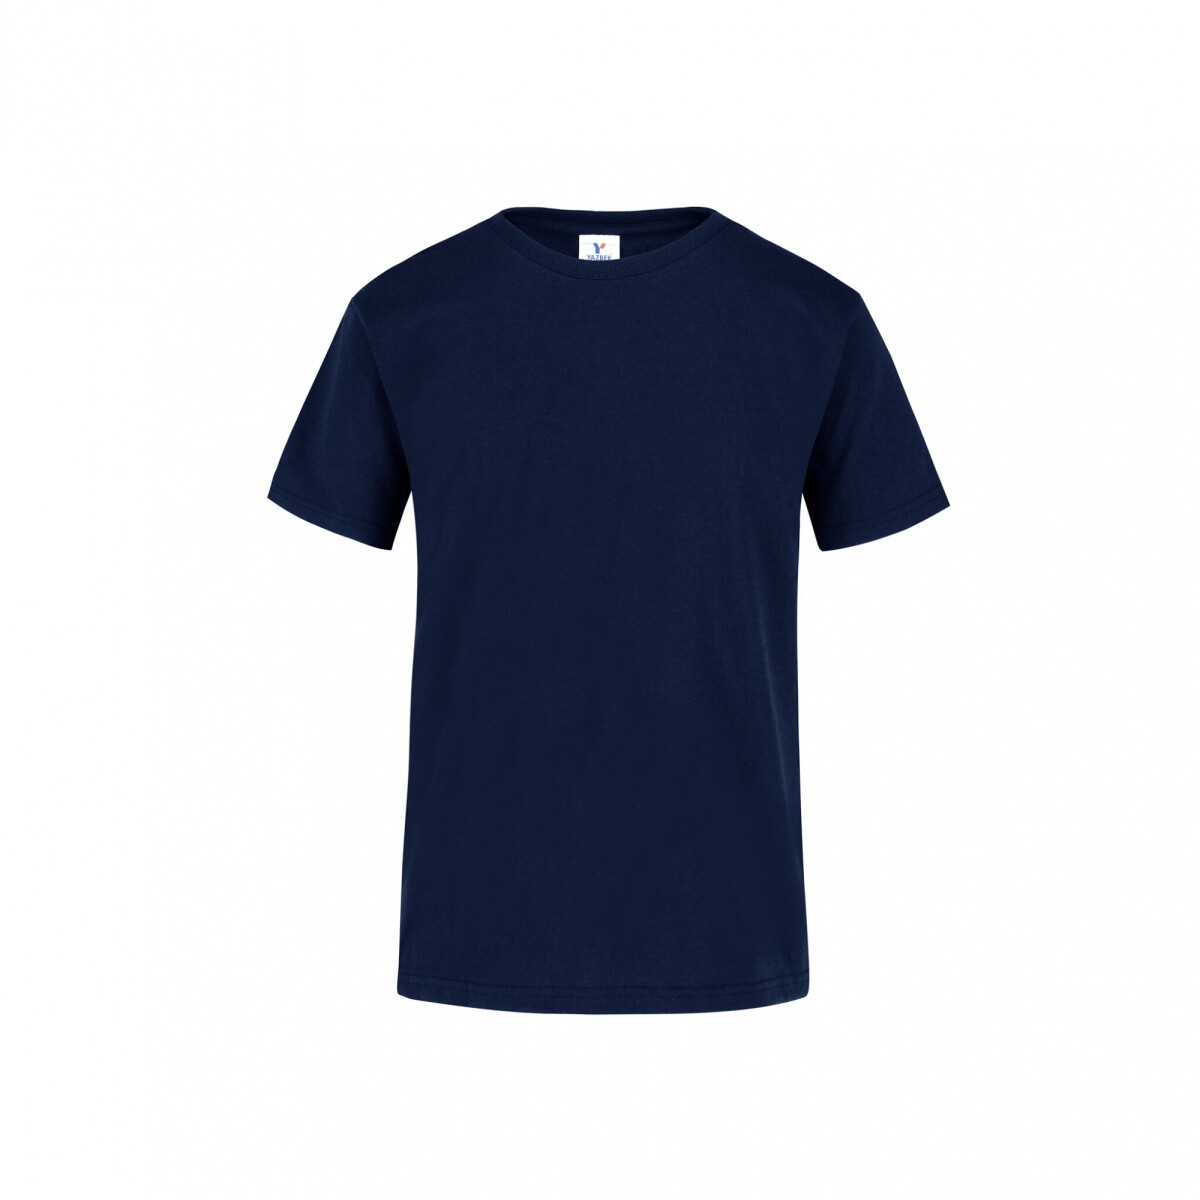 Camiseta a la base niño - Azul marino 